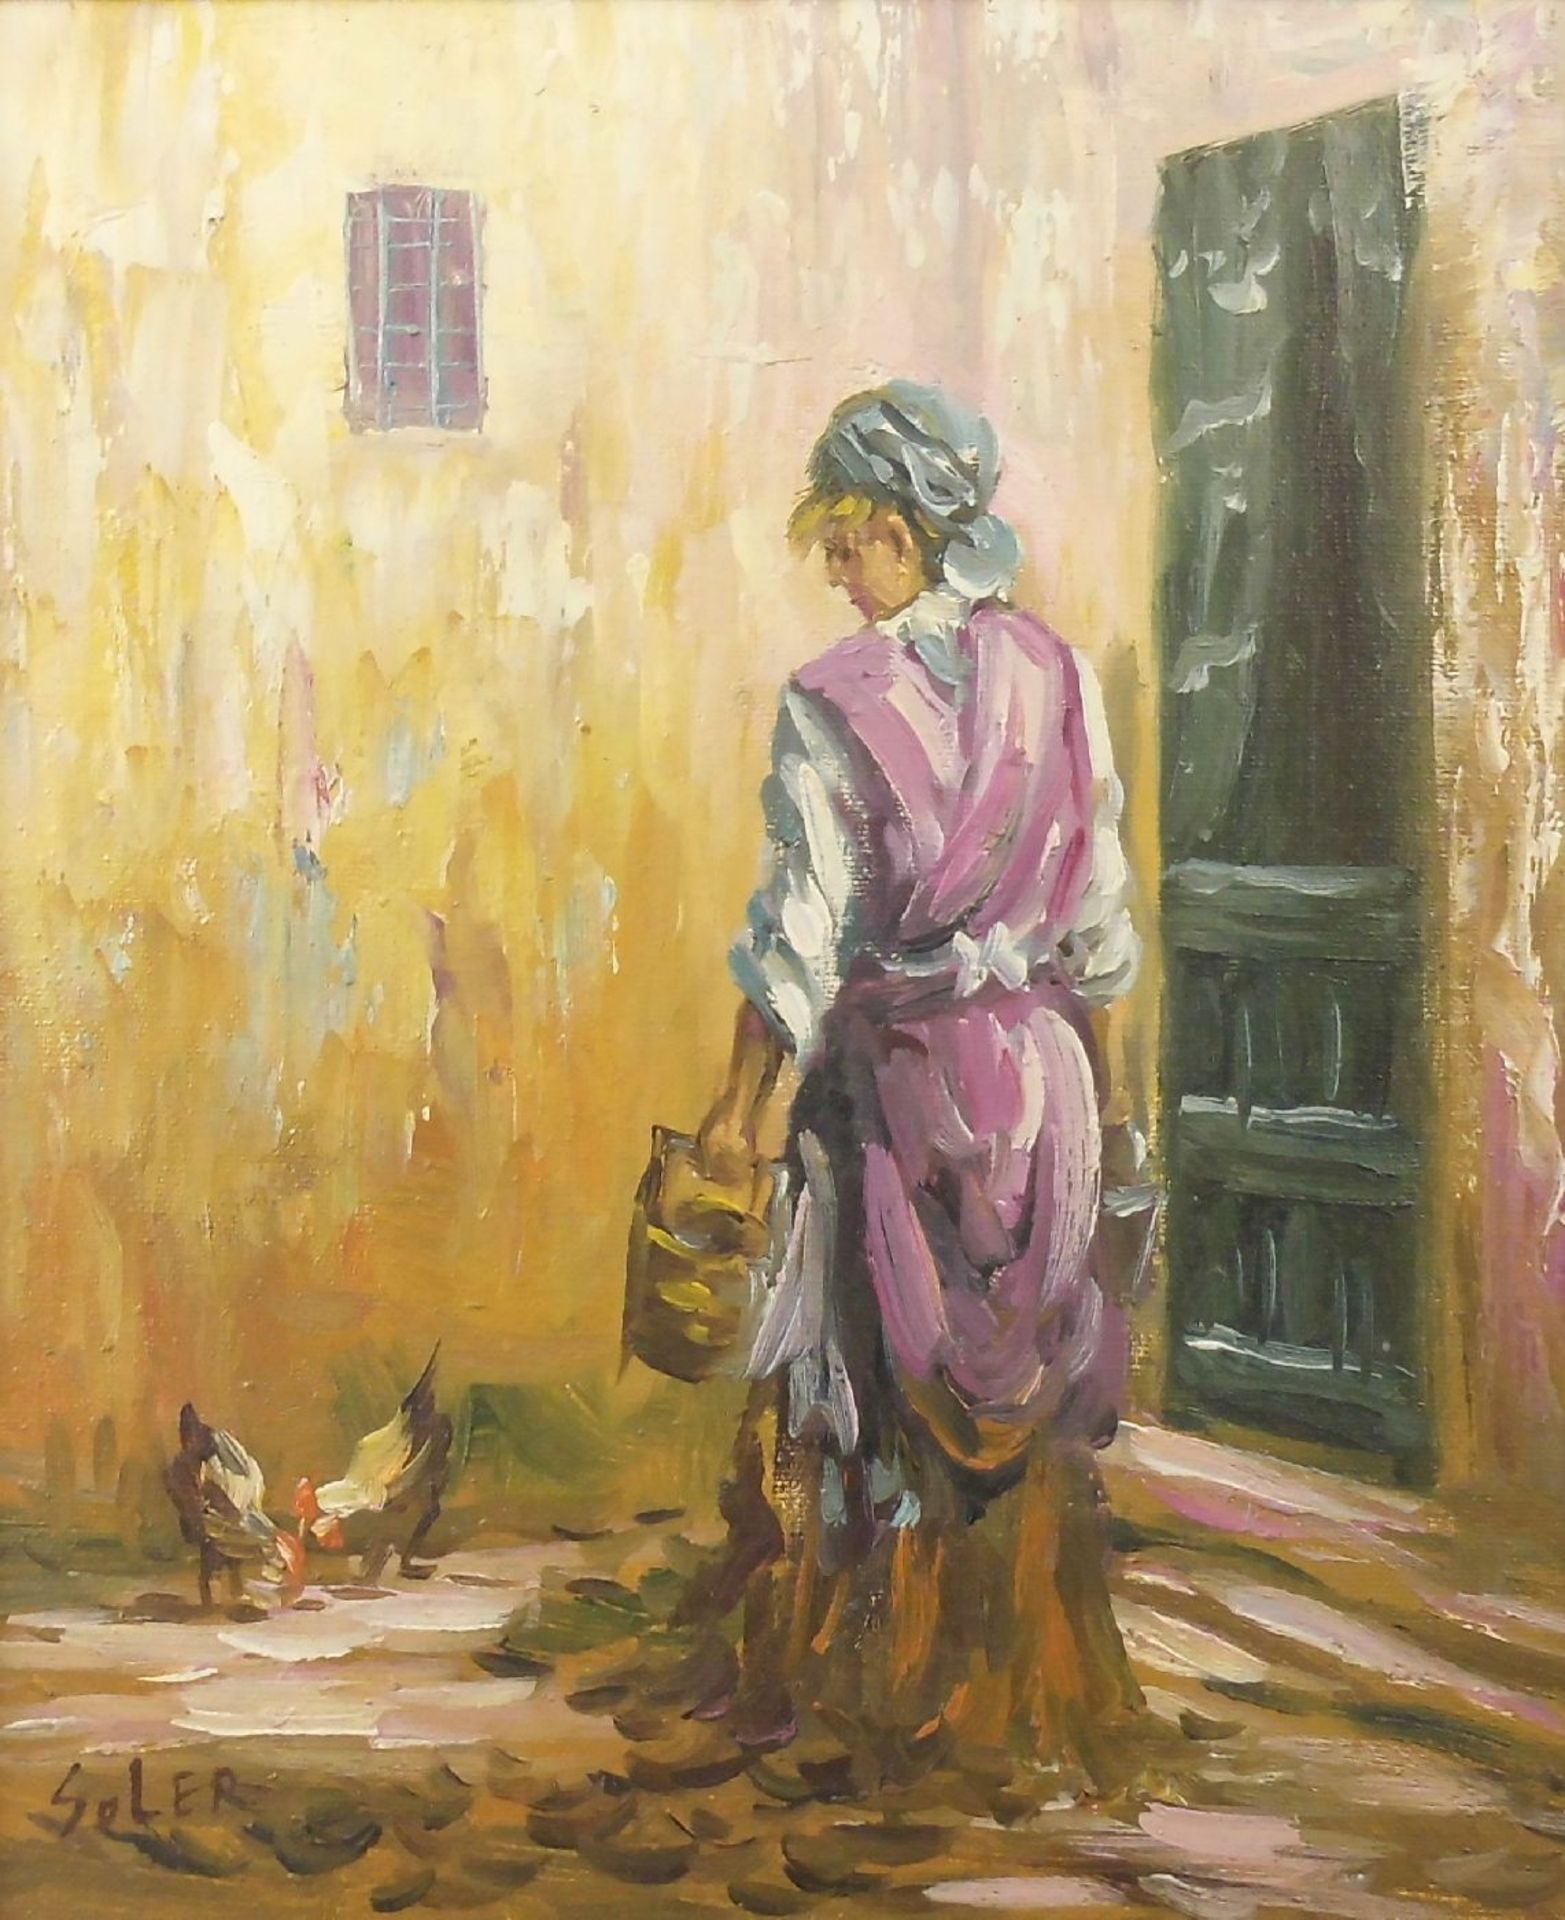 SOLER, JUAN (Juan de la Cruz Soler, geb. 1951 in Madrid), Gemälde / painting: "Frau mit Hühnern", Öl